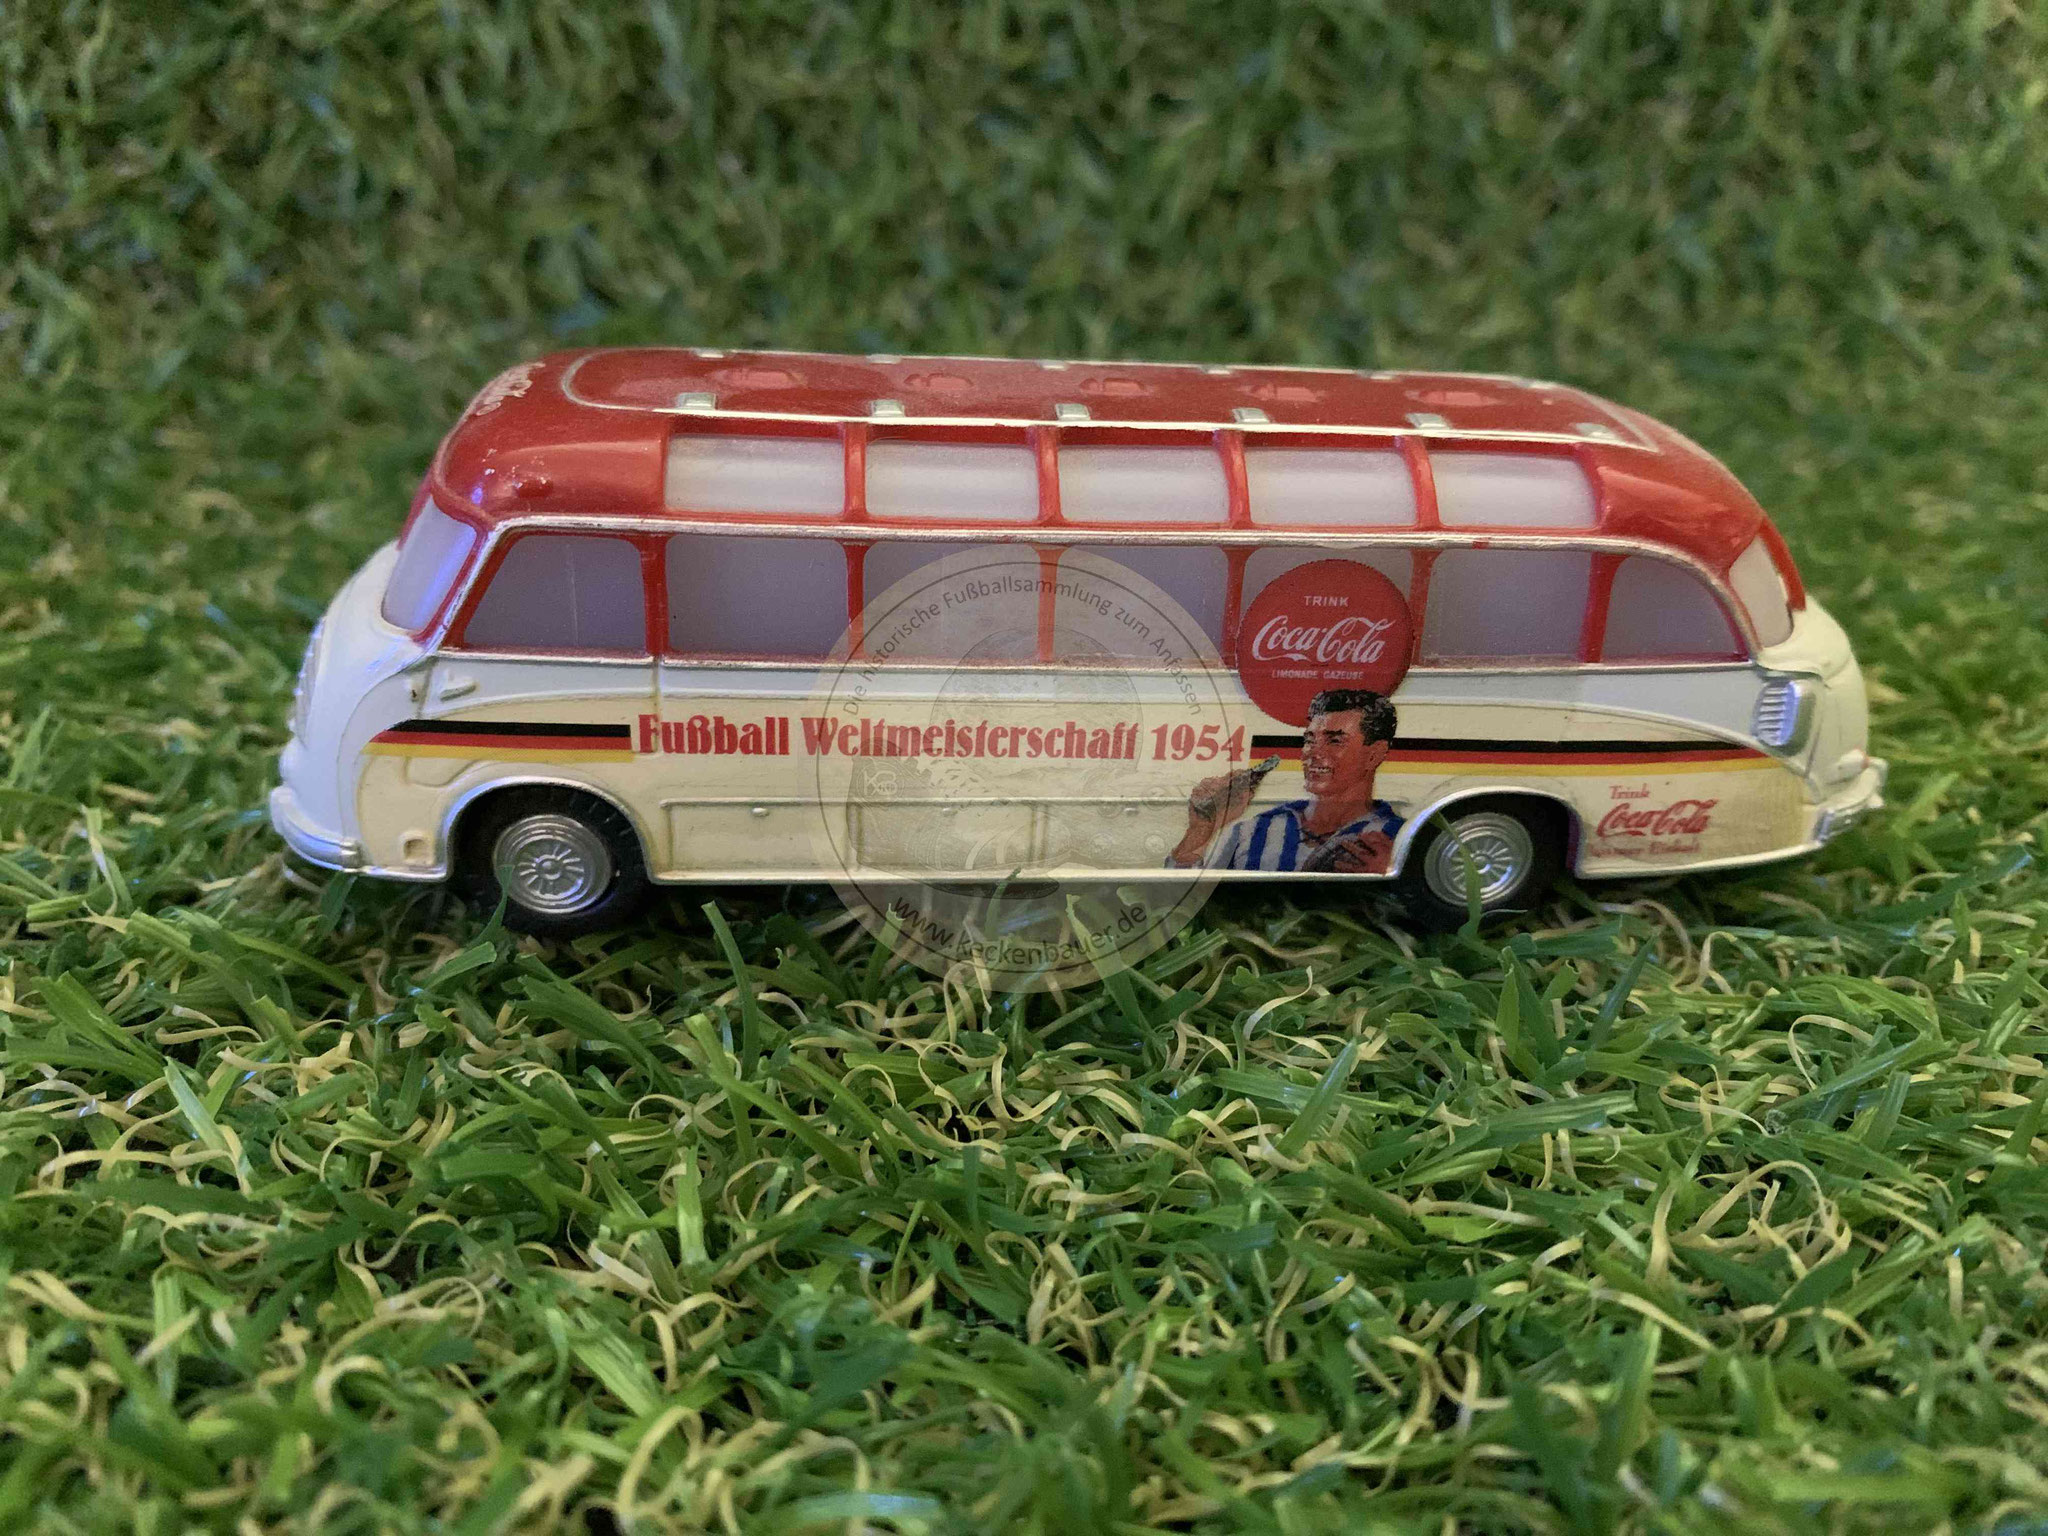 1954 Replique WM Bus von Coca Cola